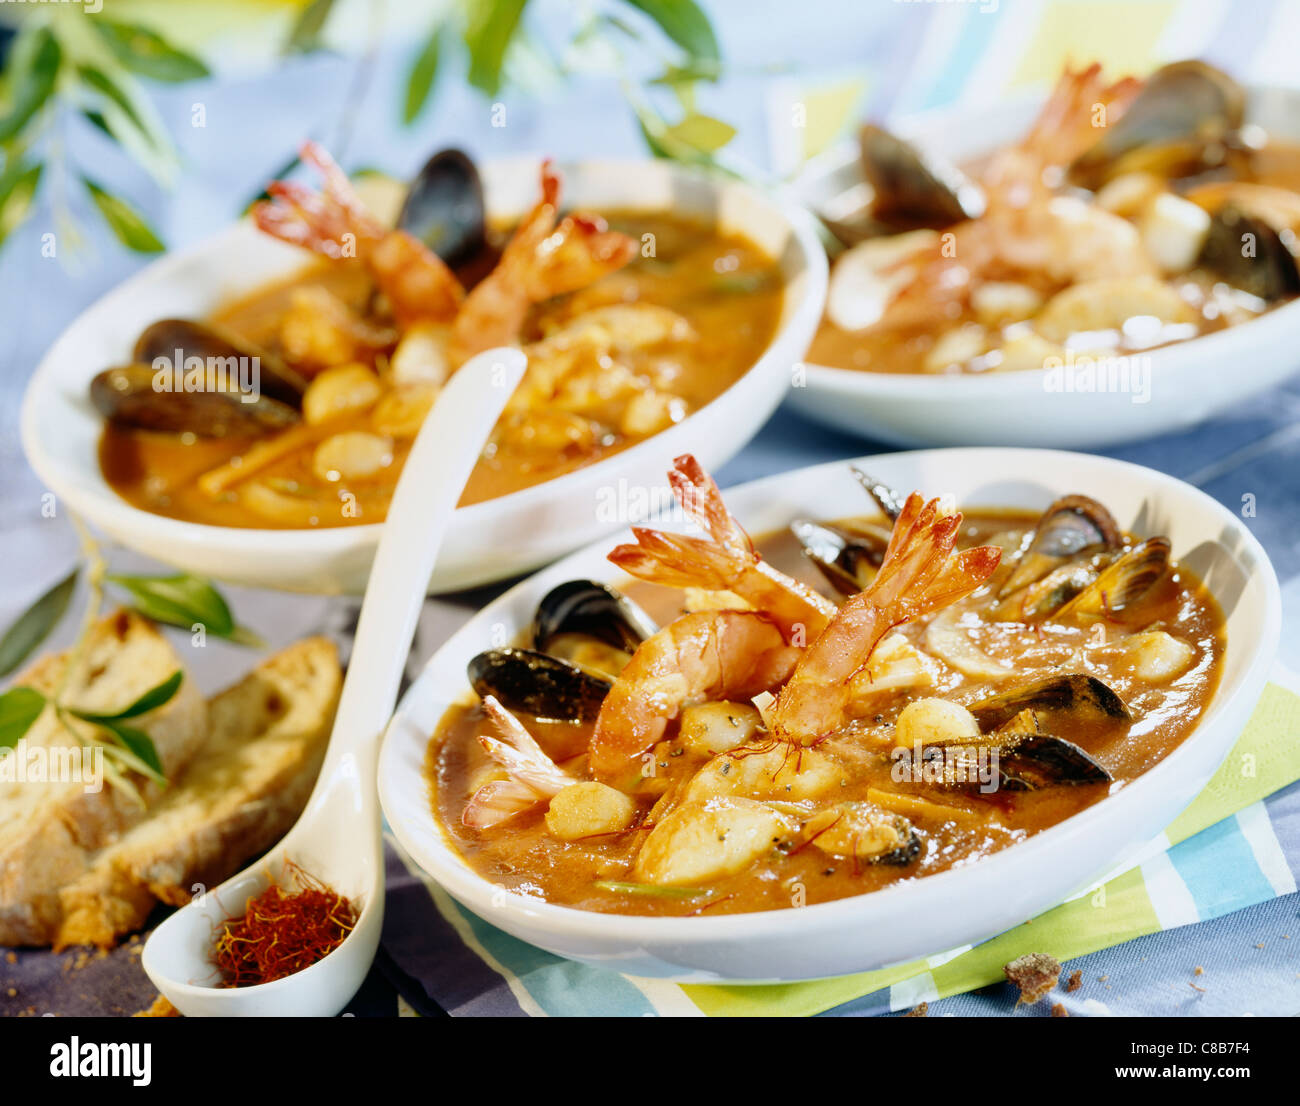 Bouillabaisse fish soup Stock Photo - Alamy